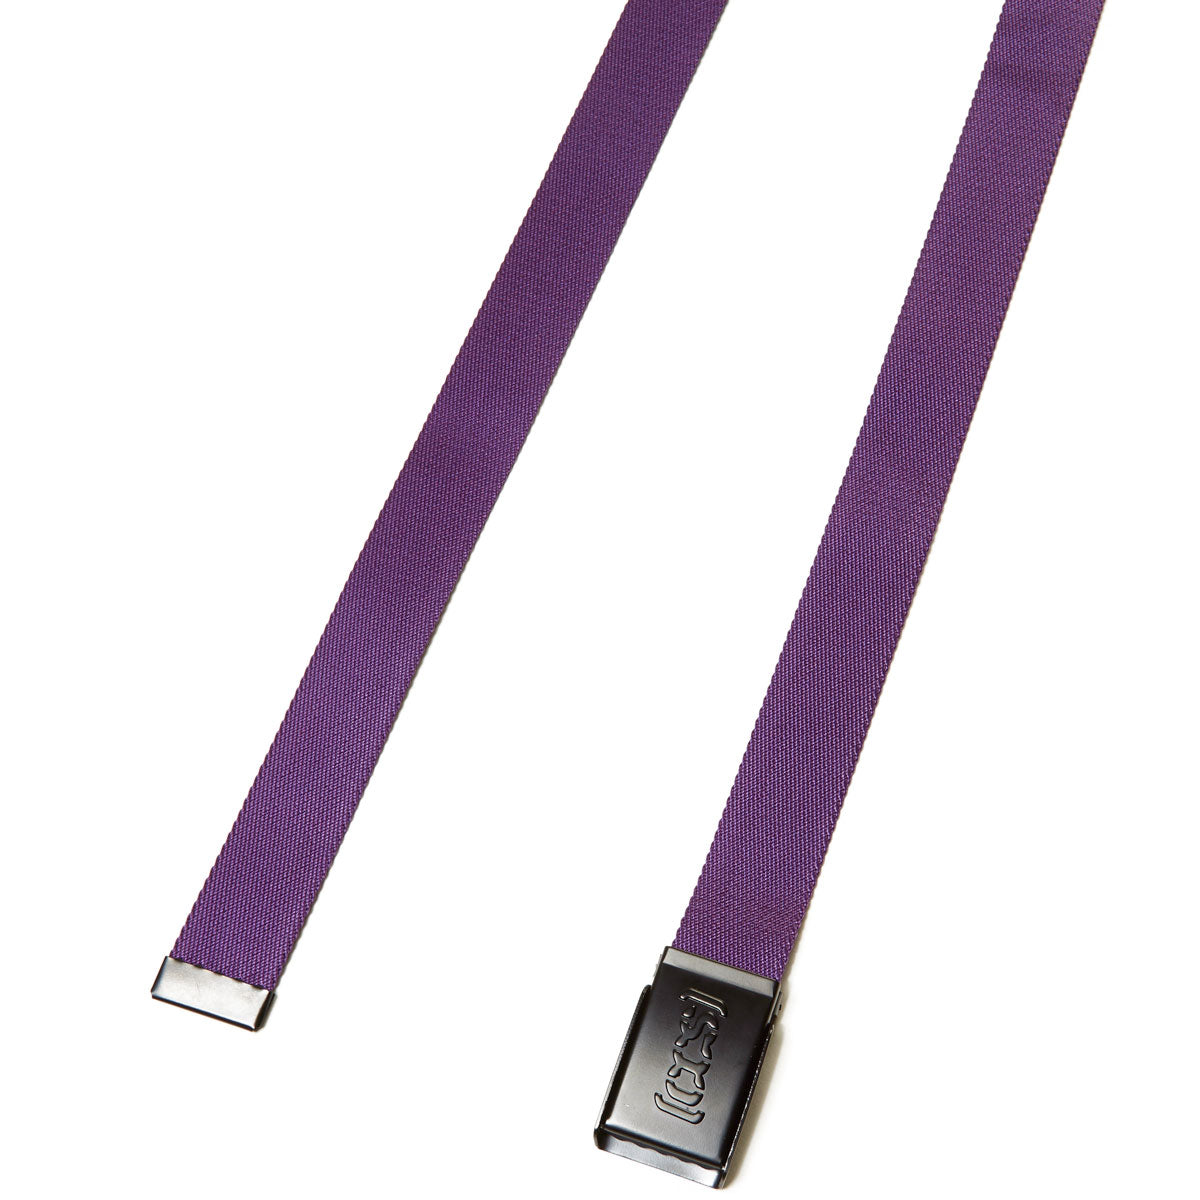 CCS Black Logo Buckle Belt - Purple image 2